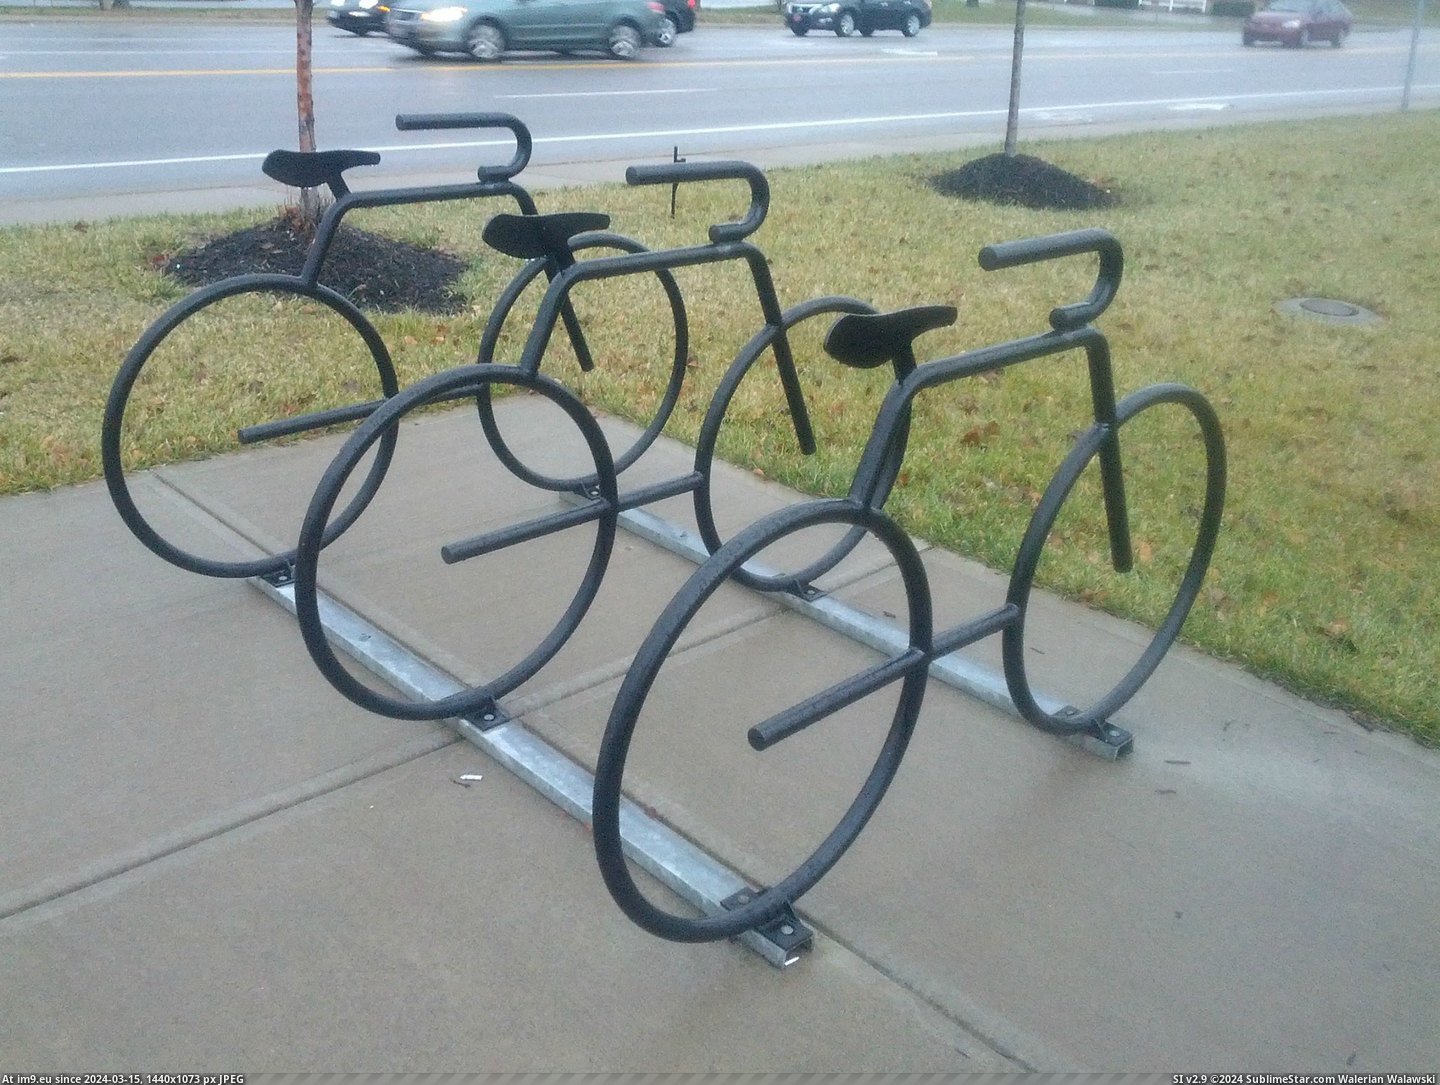 #Bike #Rack #Bikes #Shaped [Mildlyinteresting] This bike rack is shaped like bikes. 2 Pic. (Изображение из альбом My r/MILDLYINTERESTING favs))